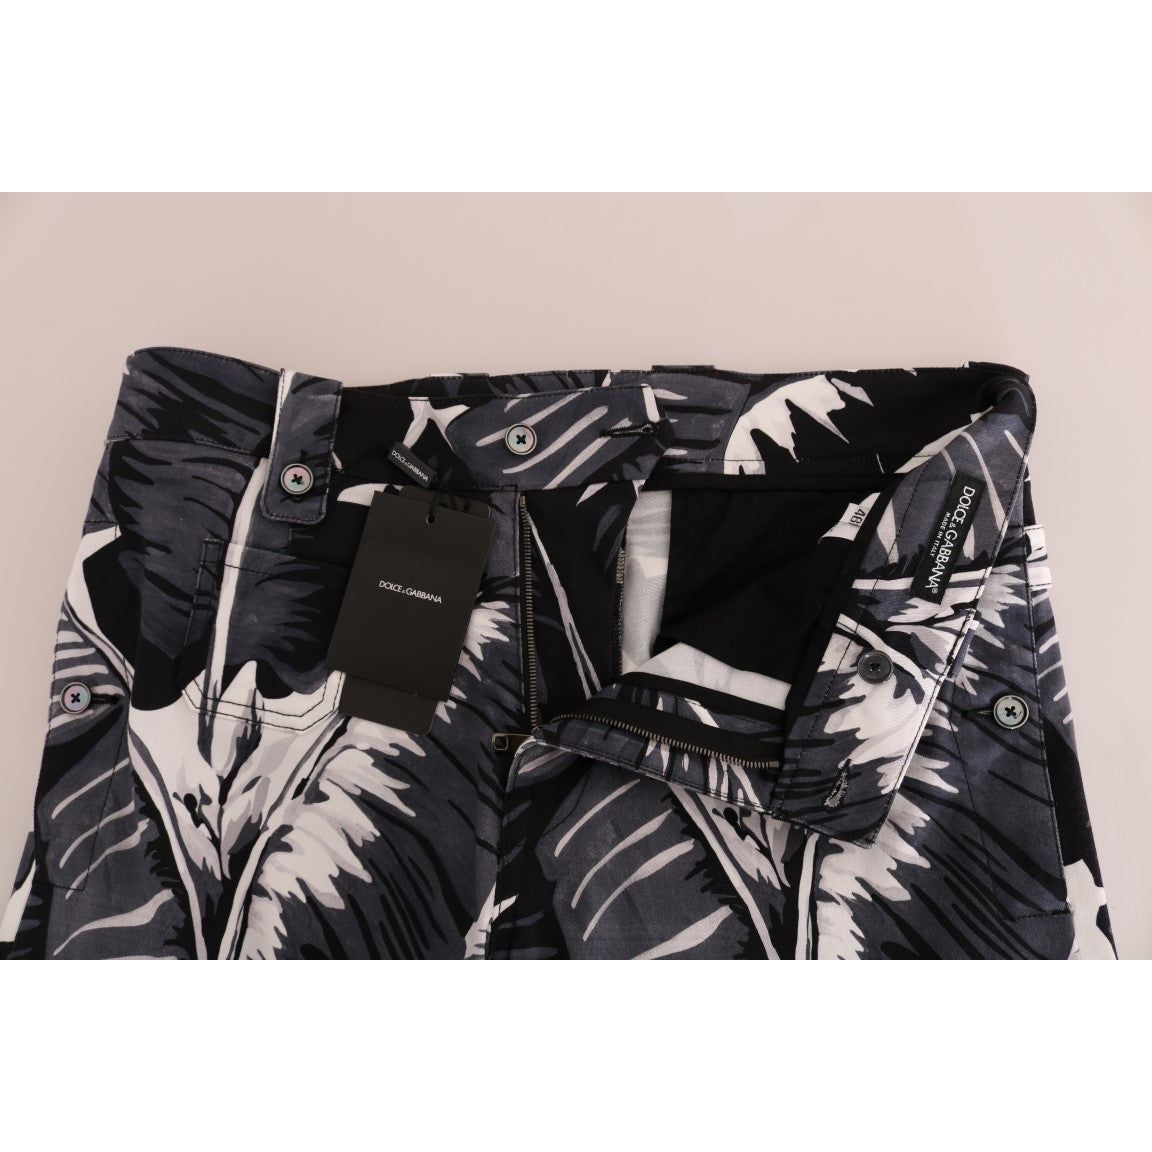 Dolce & GabbanaElegant Capri Casual Pants in Banana Leaf PrintMcRichard Designer Brands£349.00